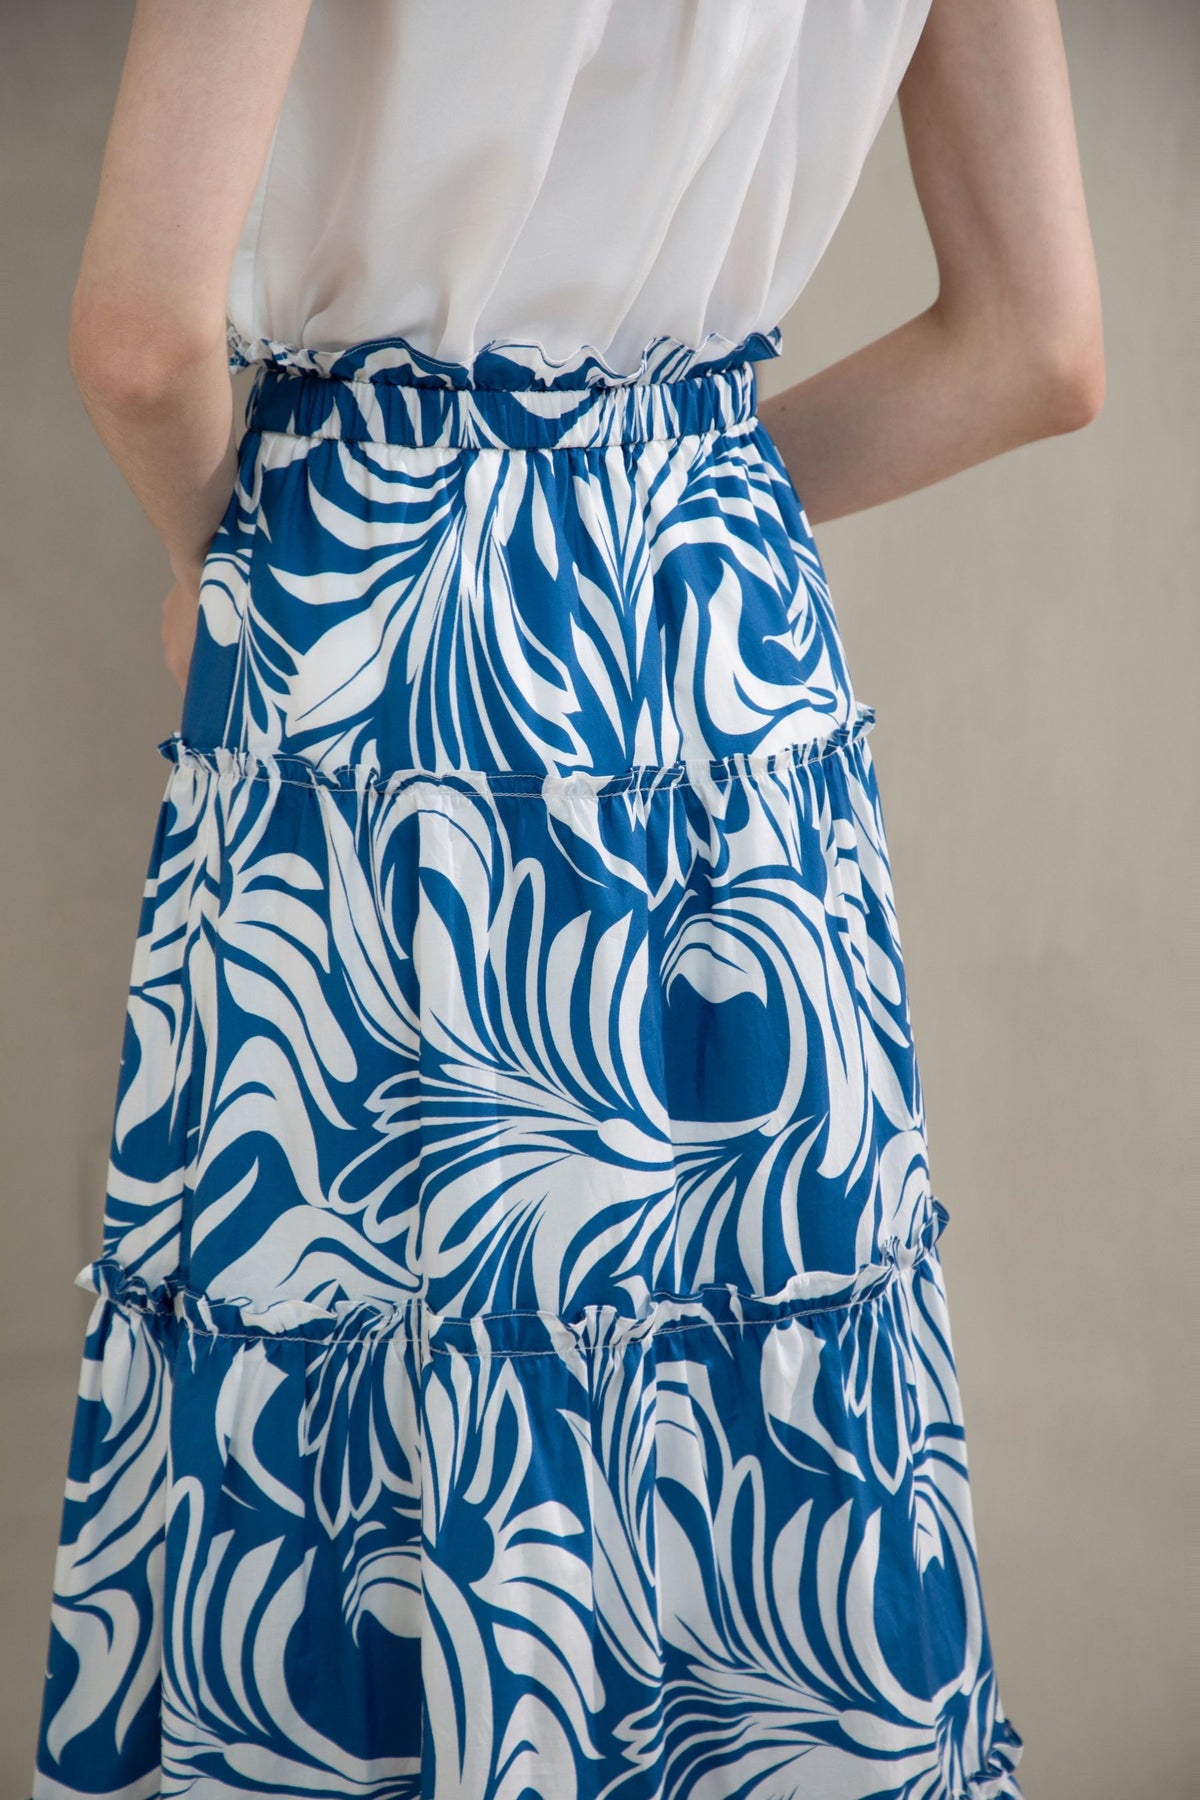 Fabian a cotton print skirt - blue & white